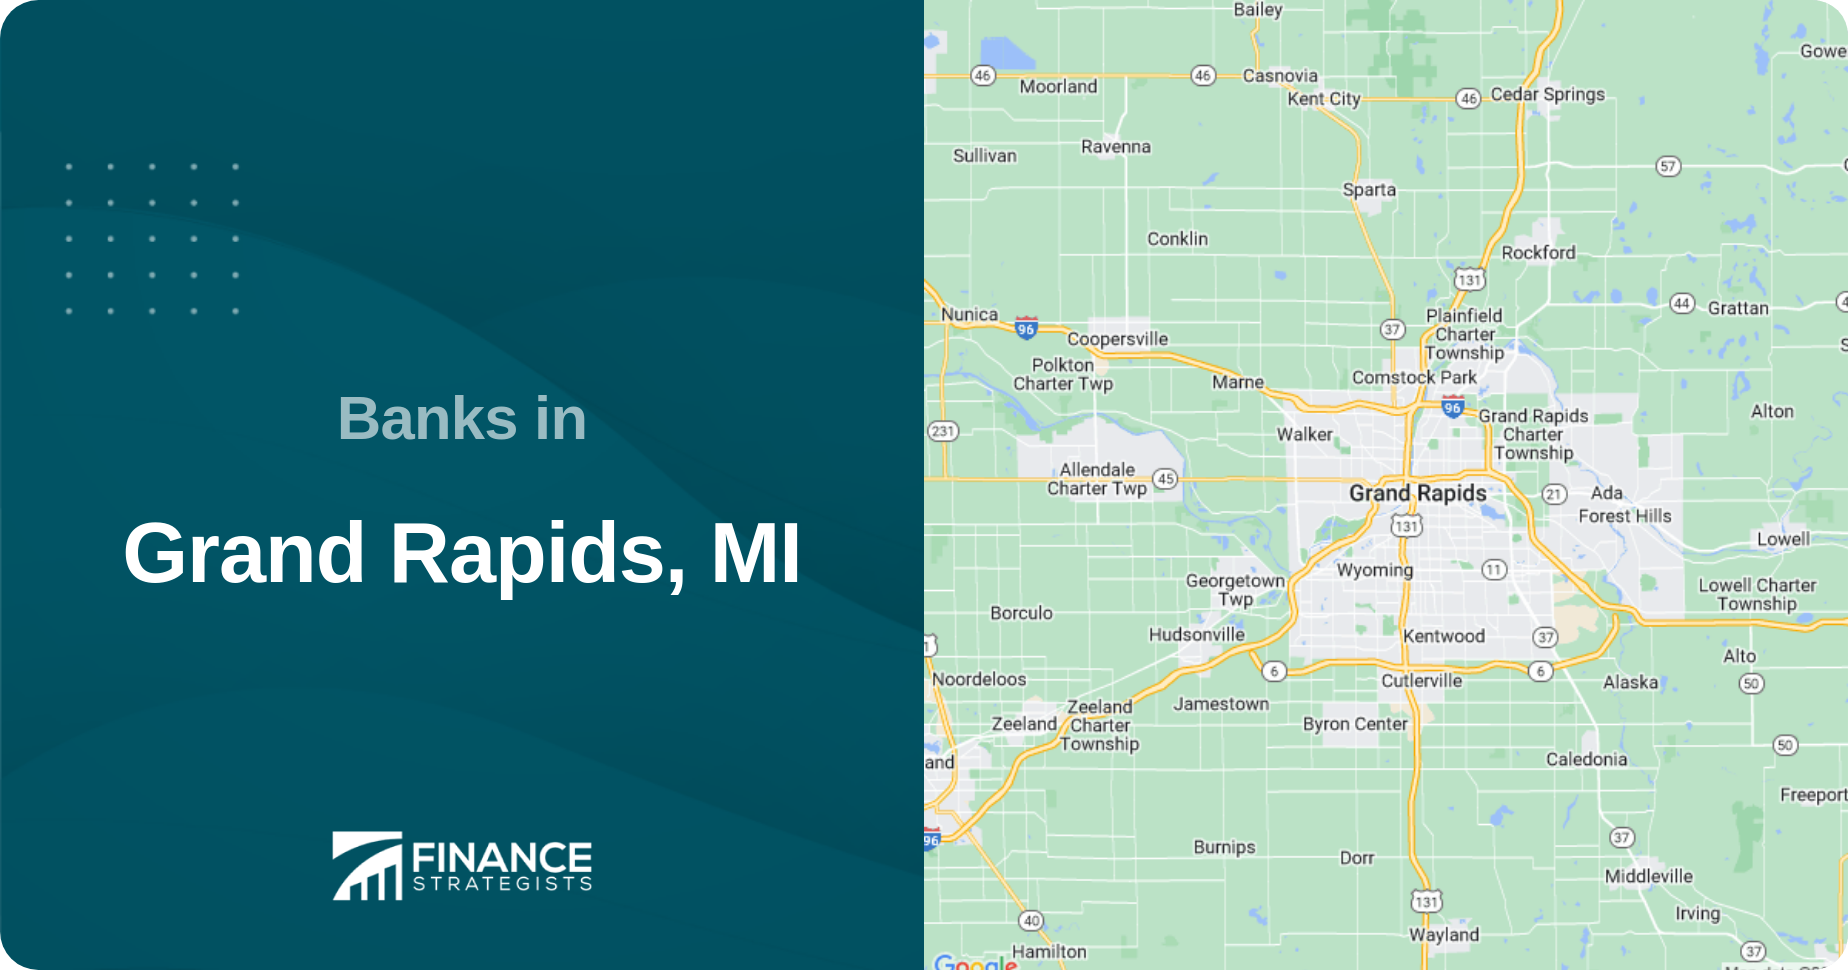 Banks in Grand Rapids, MI